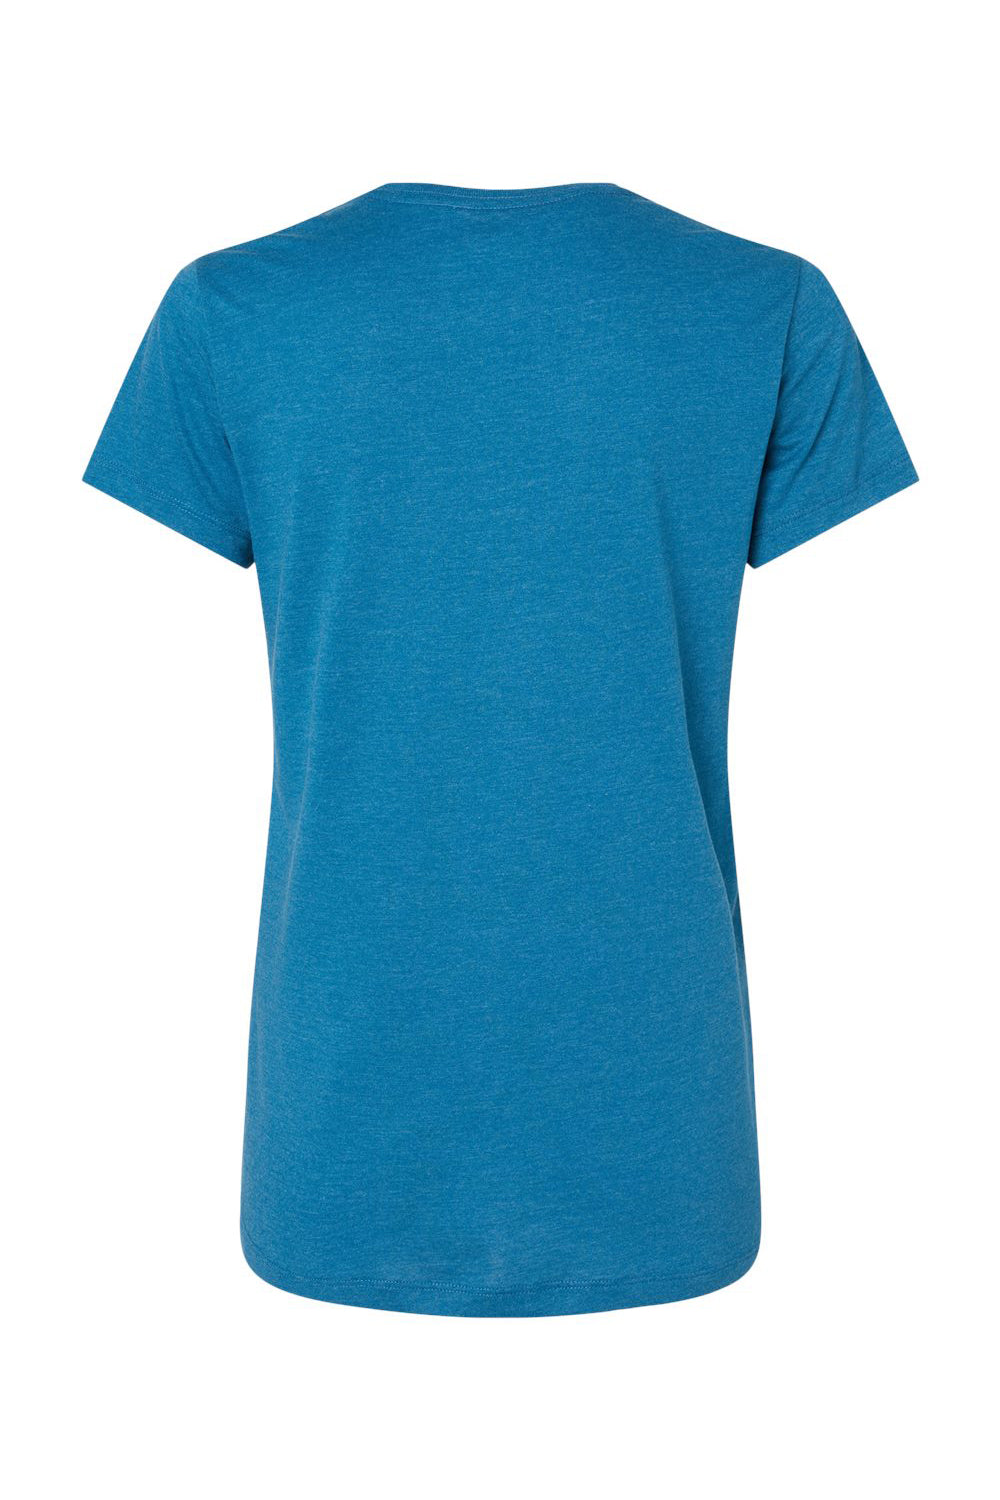 Kastlfel 2021 Womens RecycledSoft Short Sleeve Crewneck T-Shirt Breaker Blue Flat Back